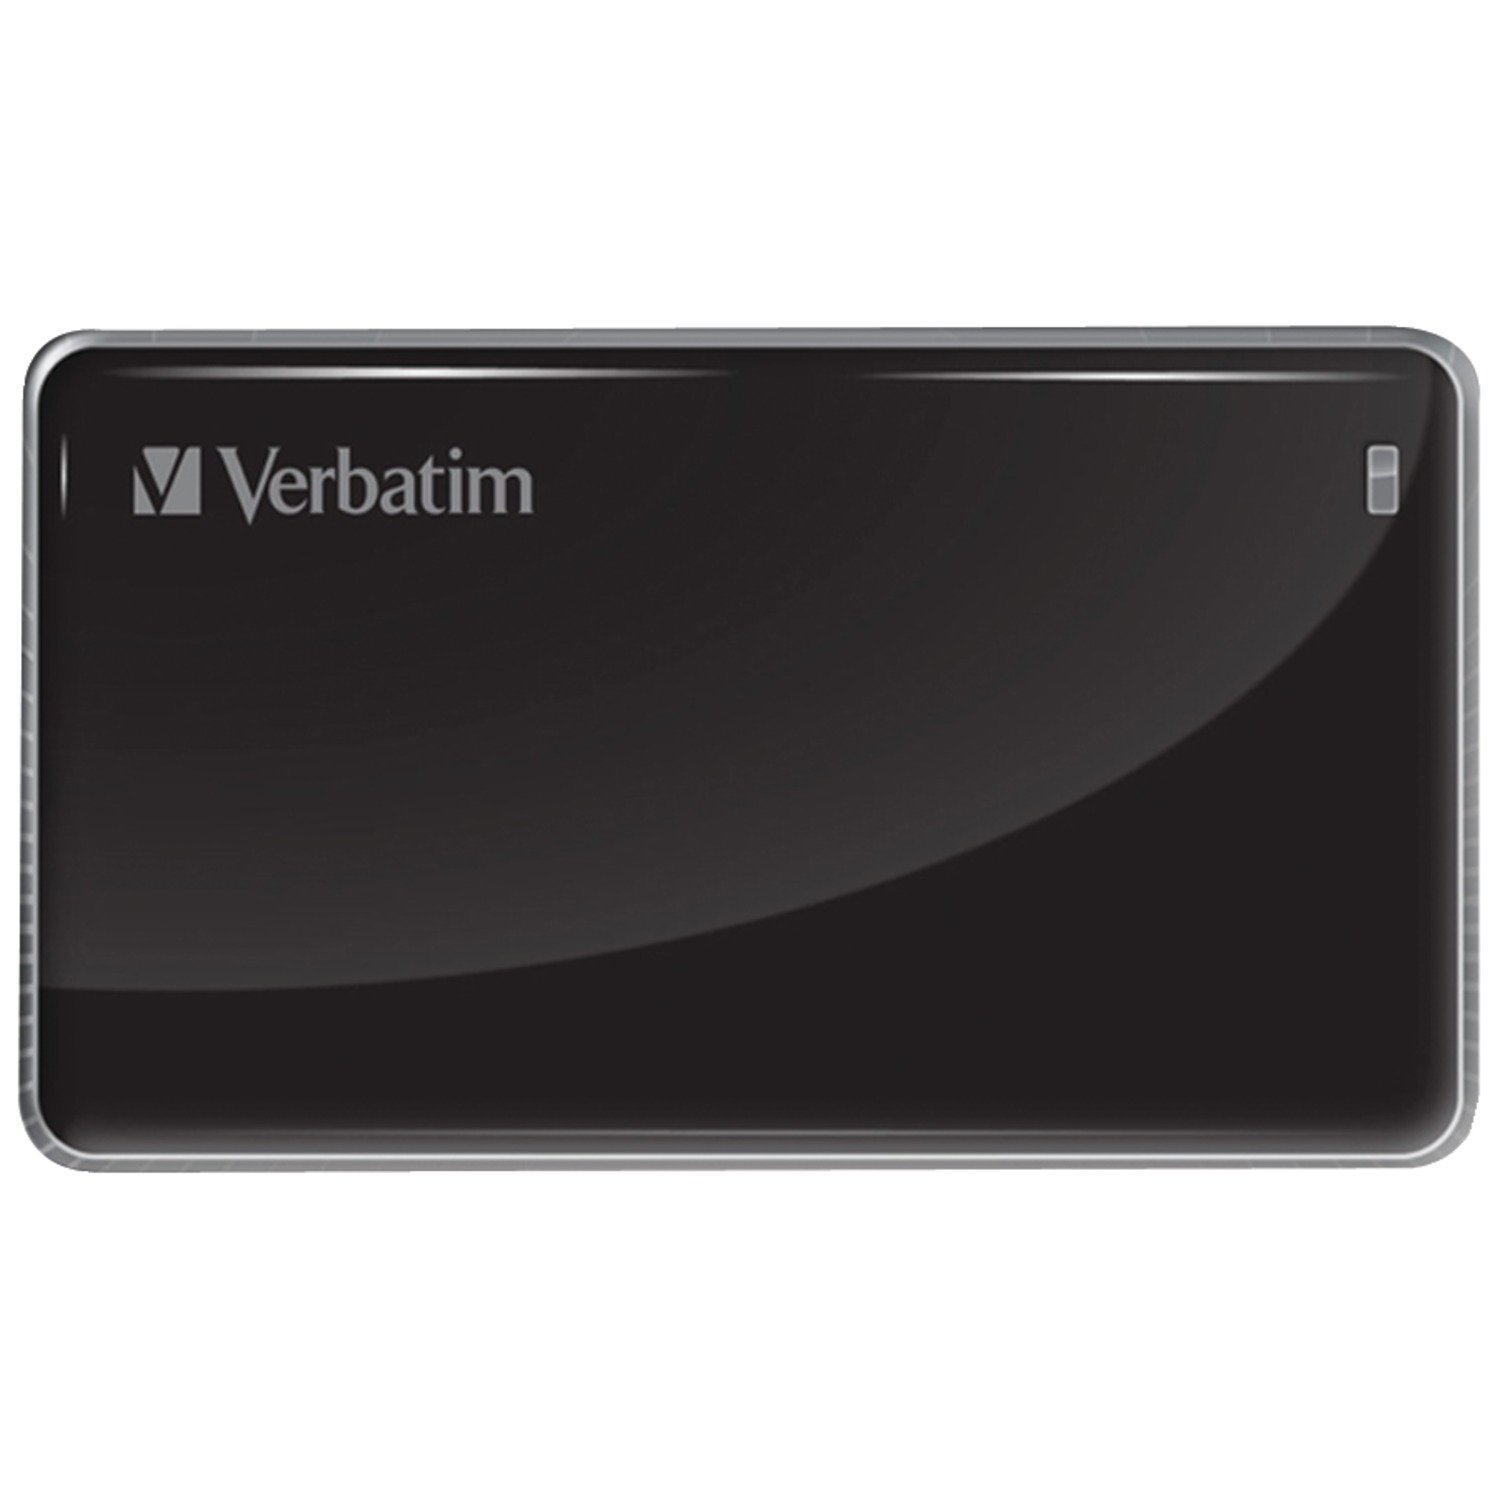 Verbatim Store 'n' Go 128 GB USB 3.0 External SSD Solid State Drive 47622 $119.99